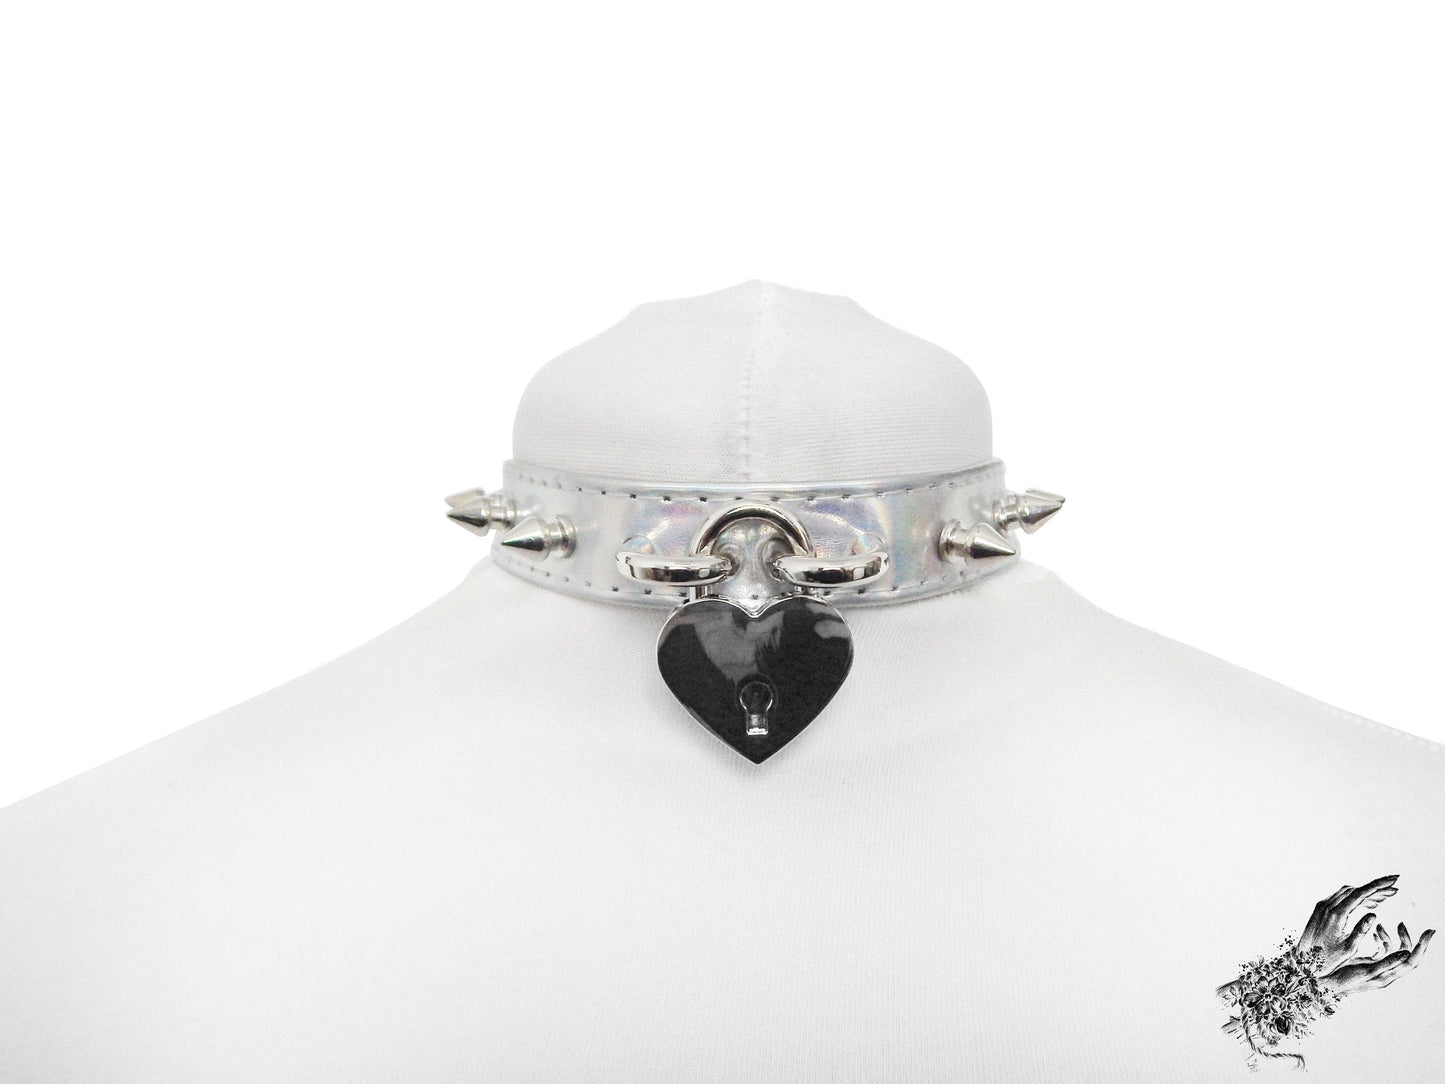 Holographic Silver Studded Heart Padlock Choker - LARGE SIZE